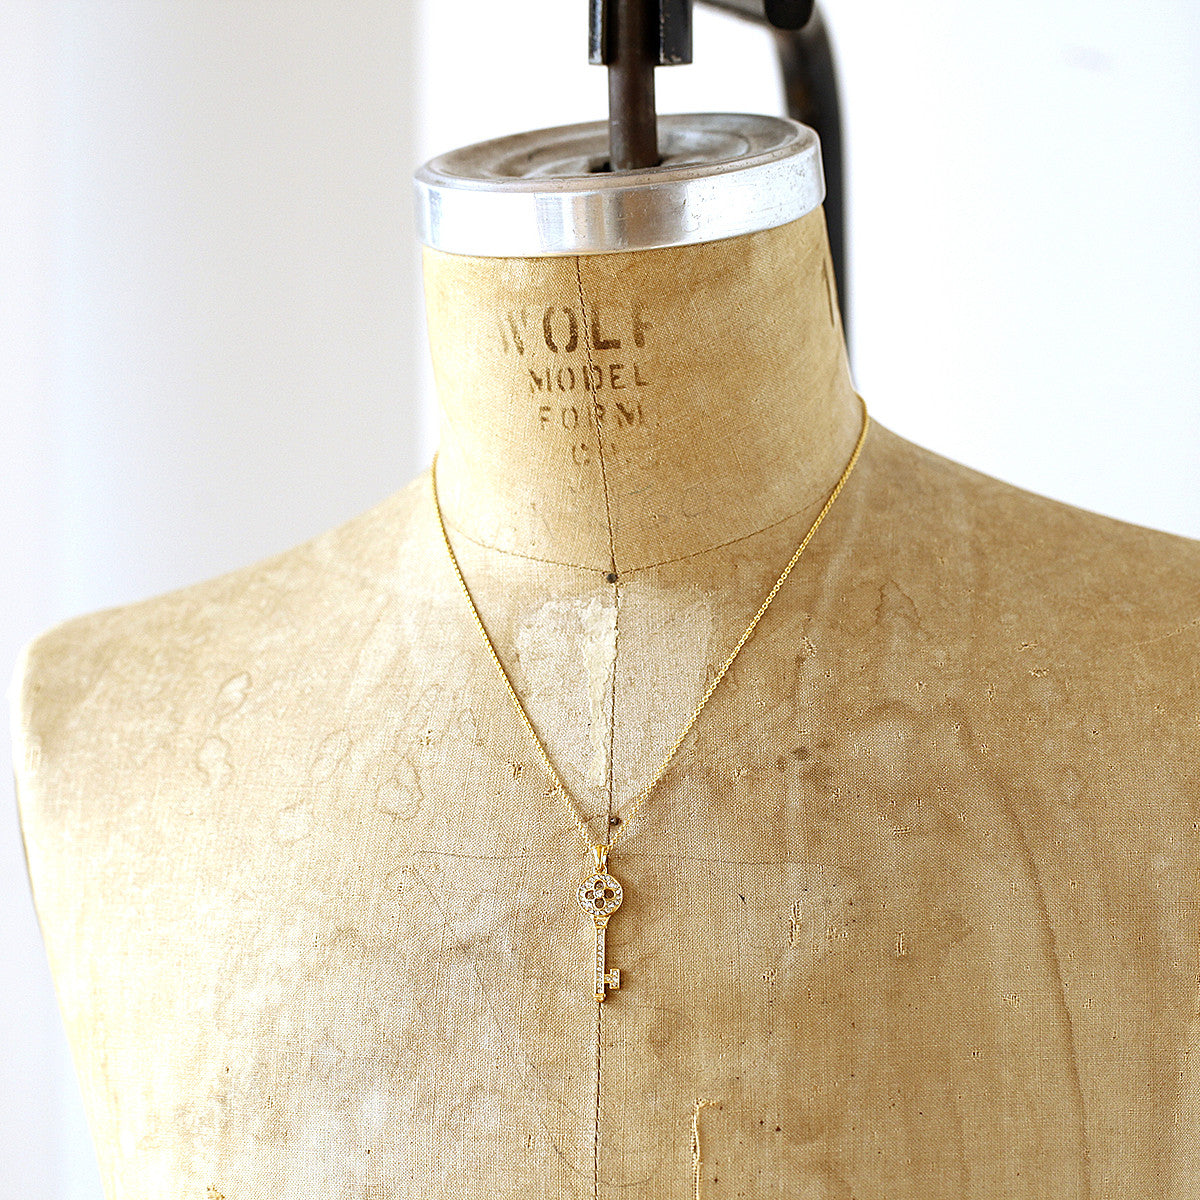 Designer Inspired Key Pendant Necklace with Premium CZ